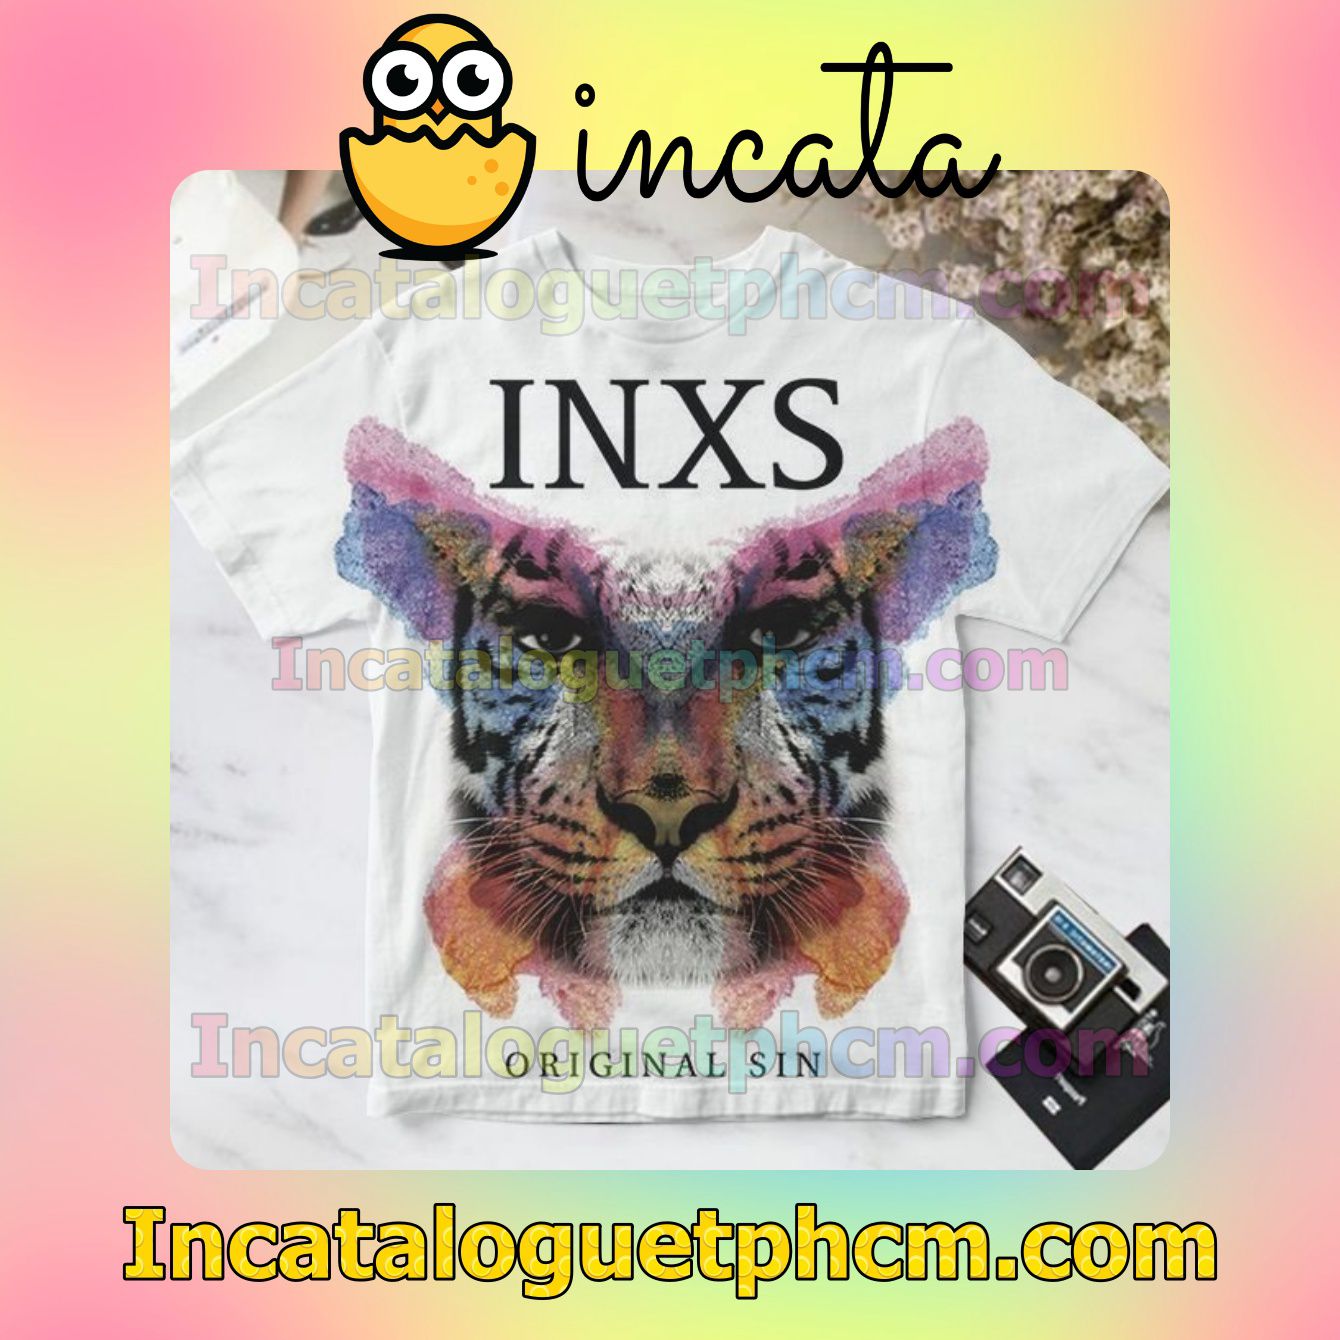 Inxs Original Sin Album Cover Personalized Shirt